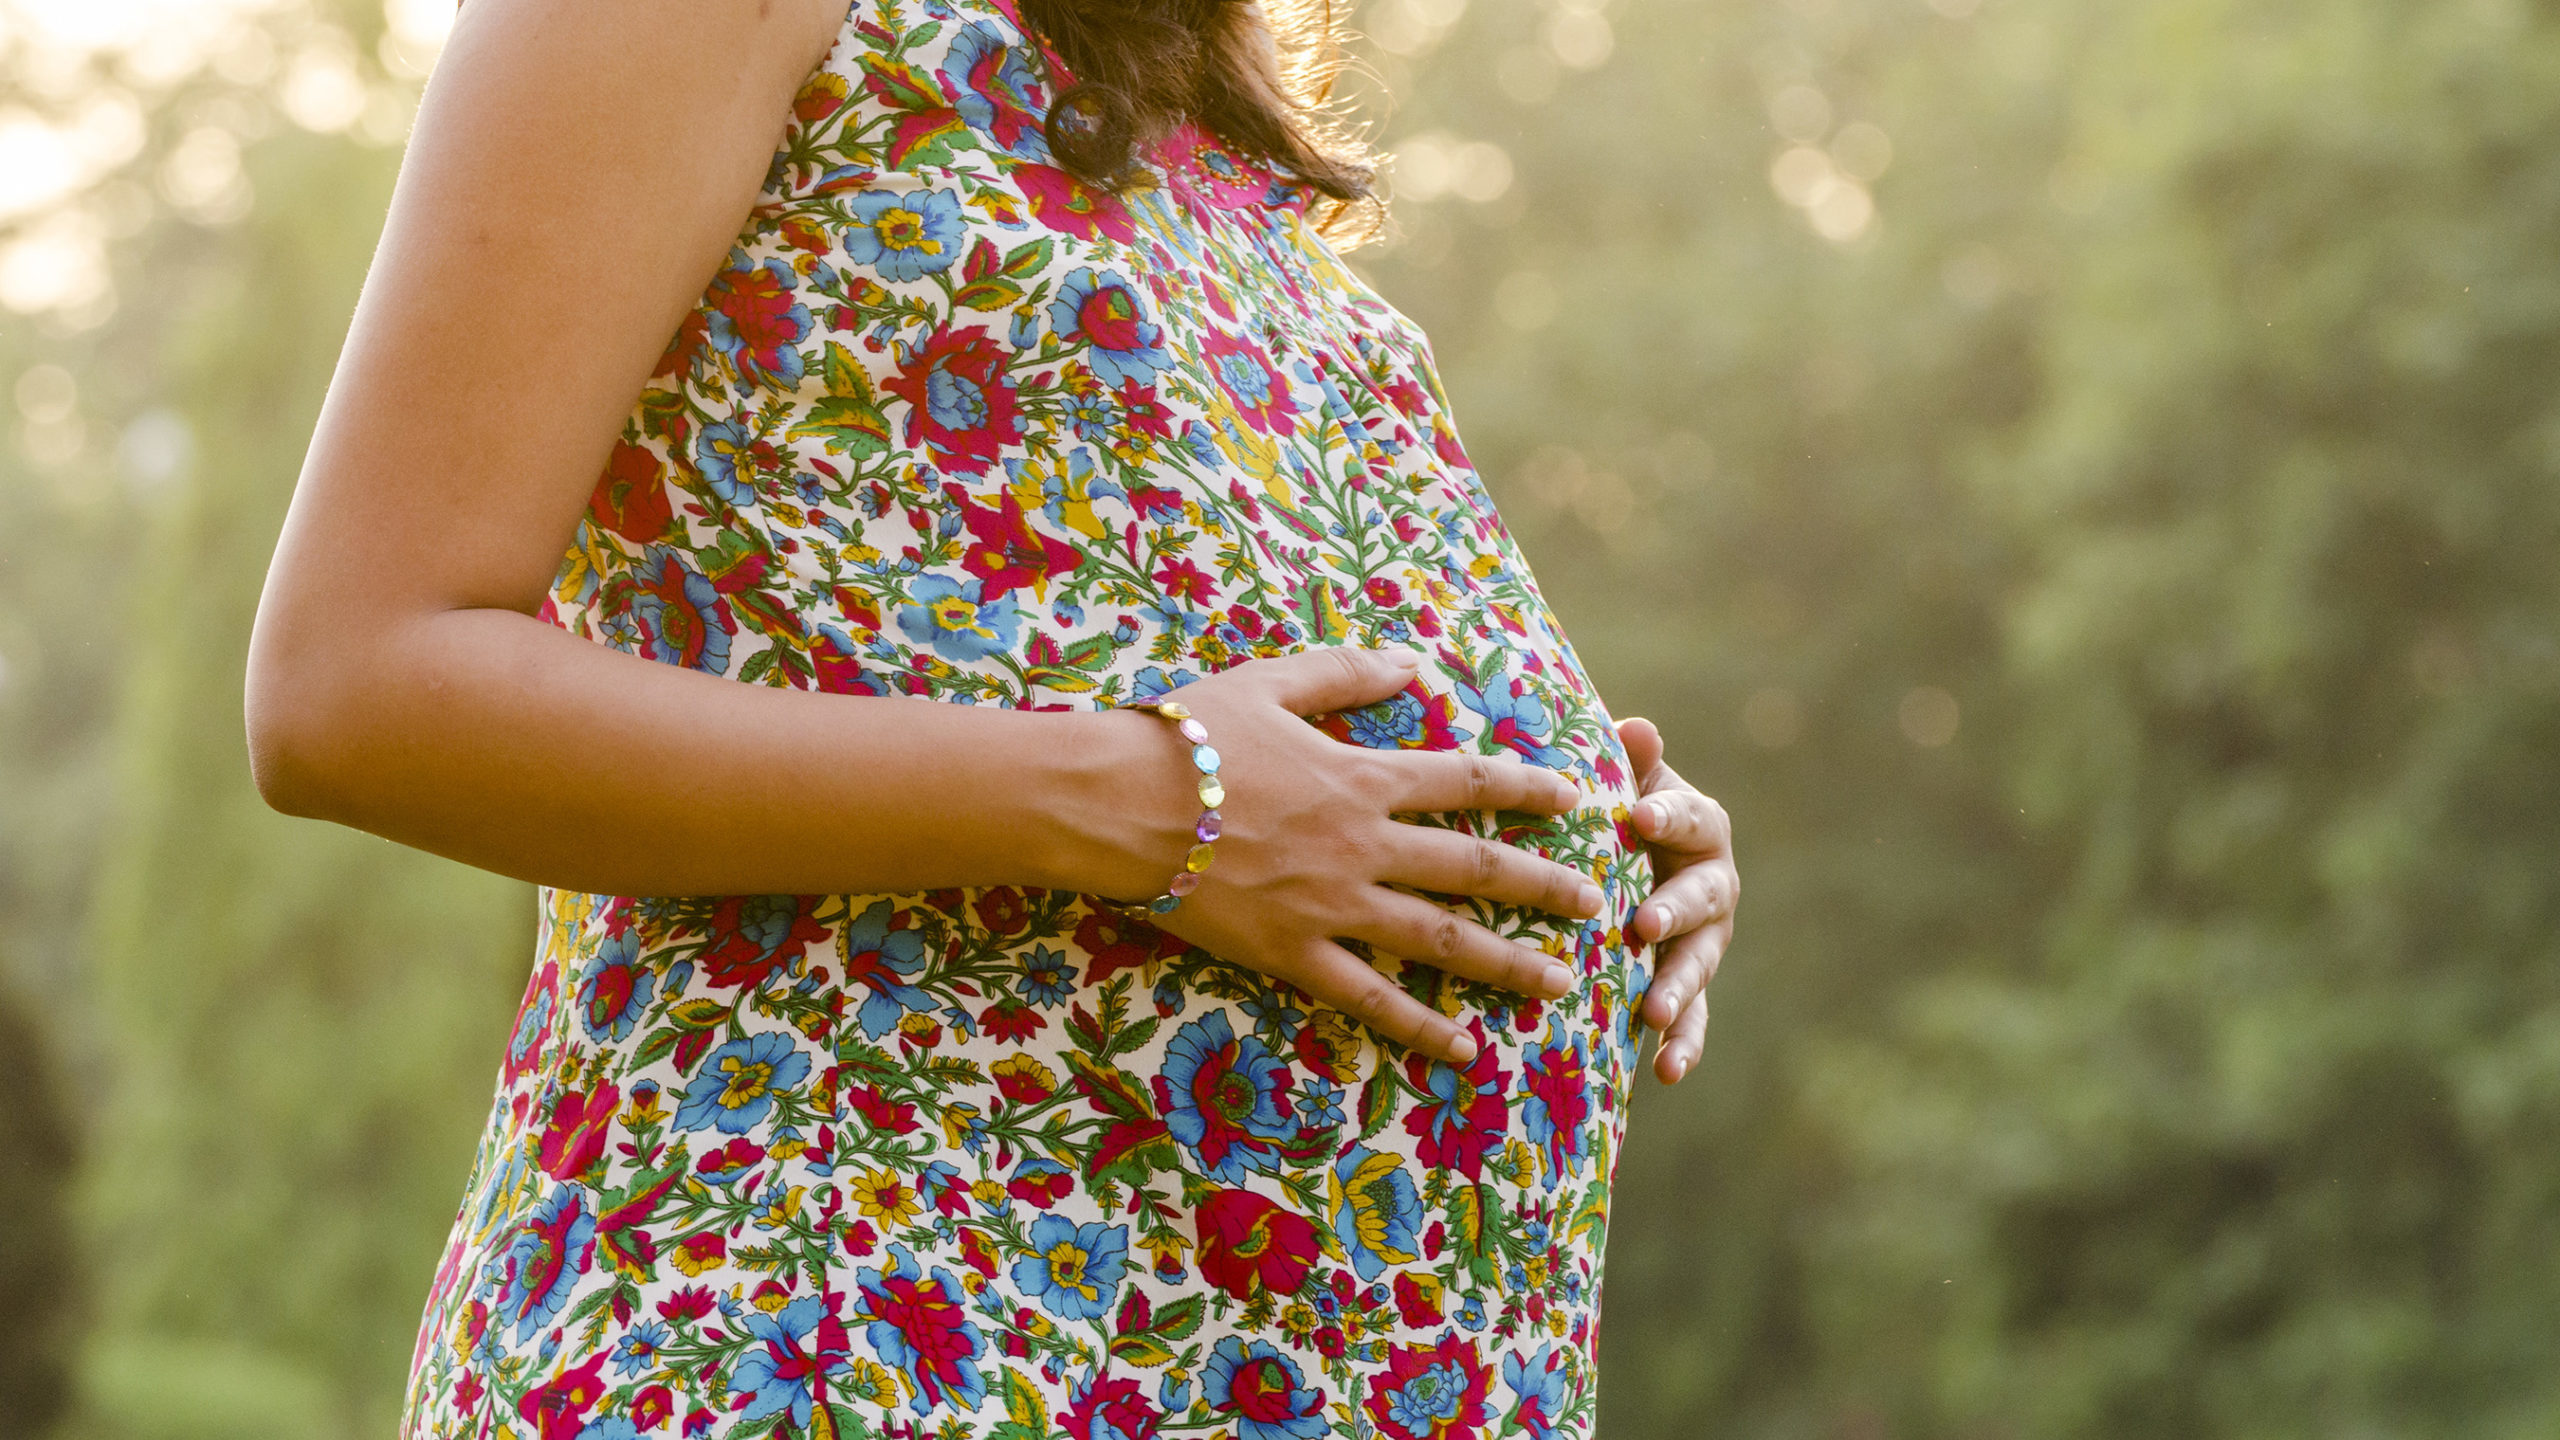 pregnant woman des news scaled e1602449869102.